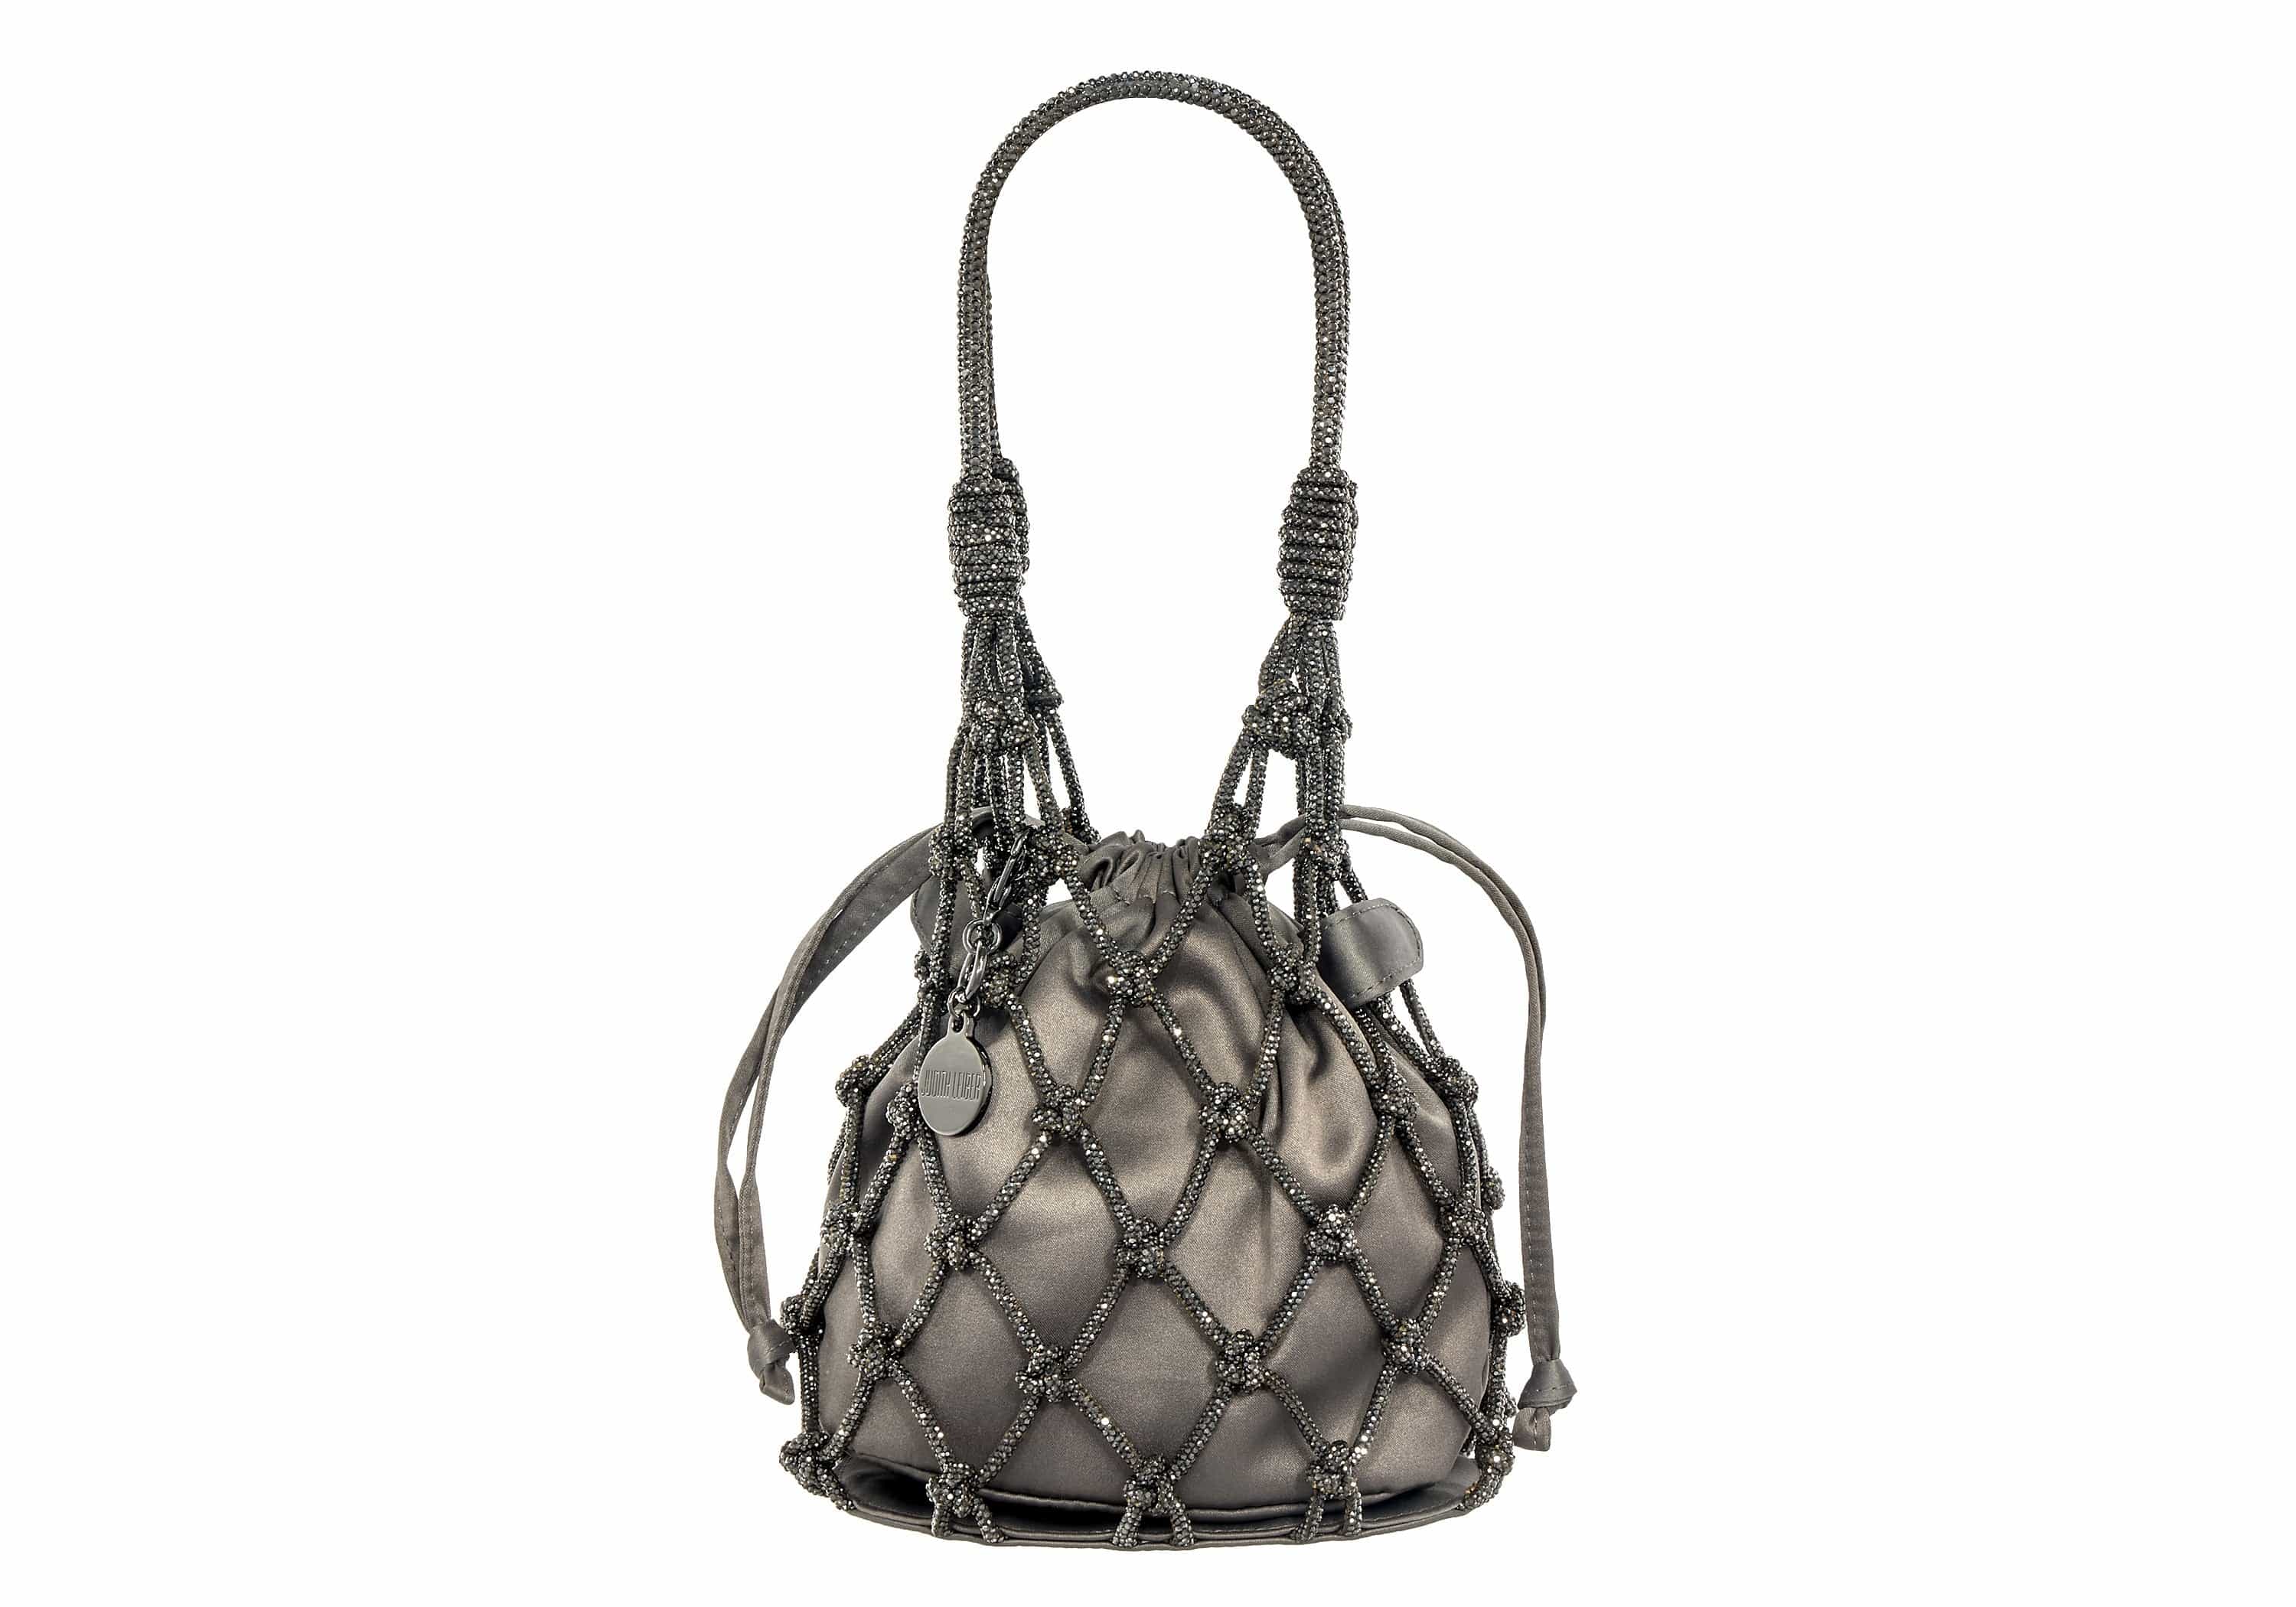 Judith Leiber Sparkle Crystal Net Top-Handle Bag